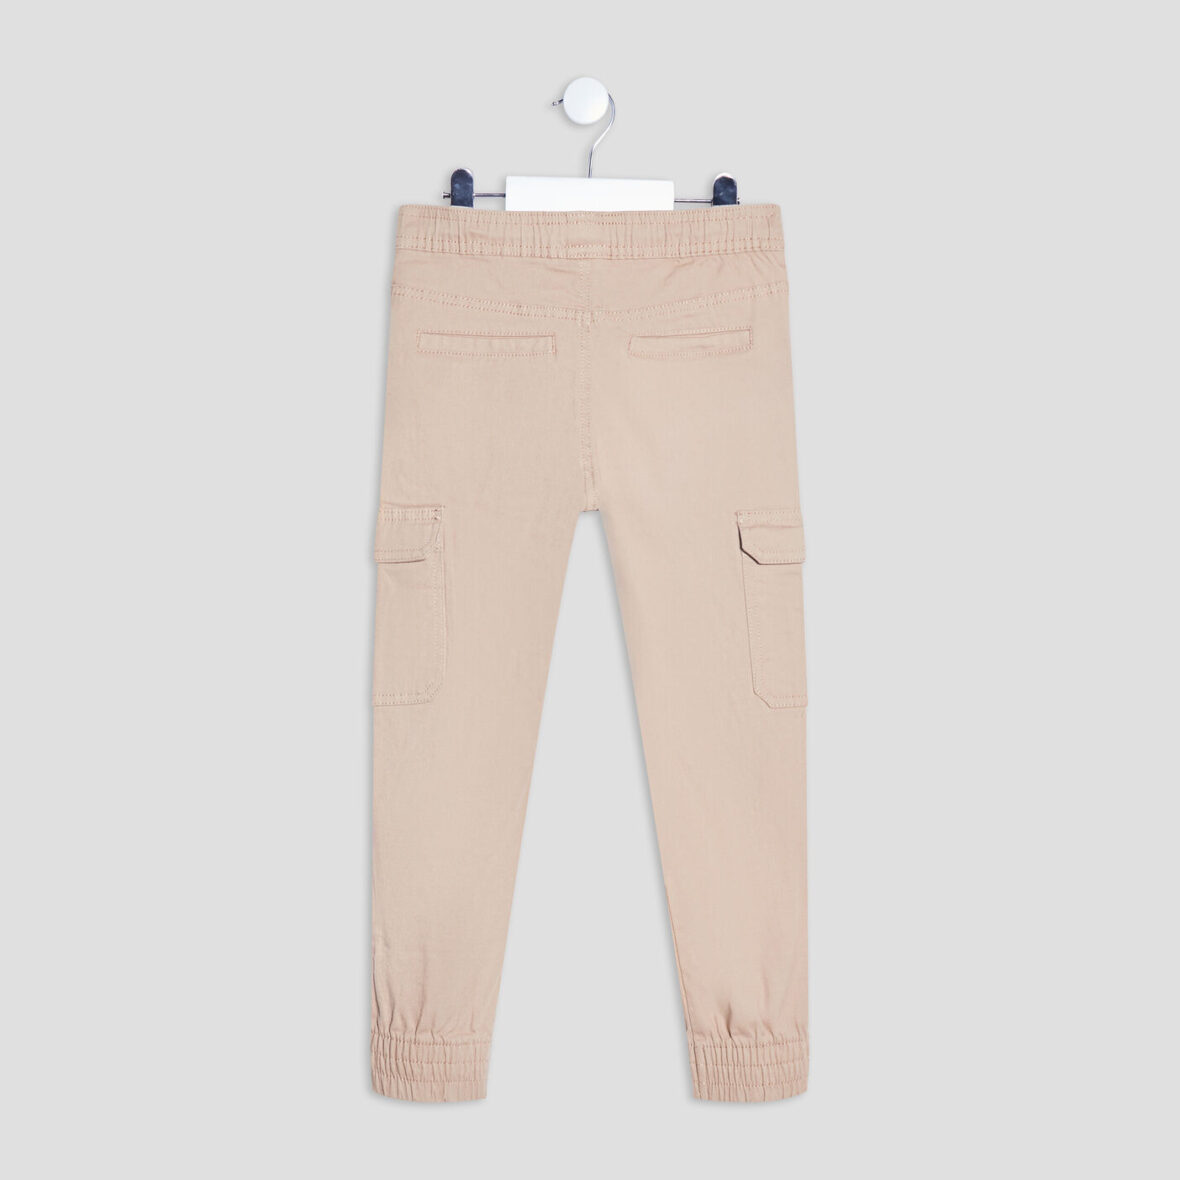 pantalon-battle-taille-elastiquee-beige-garcon-a-36165600616541000